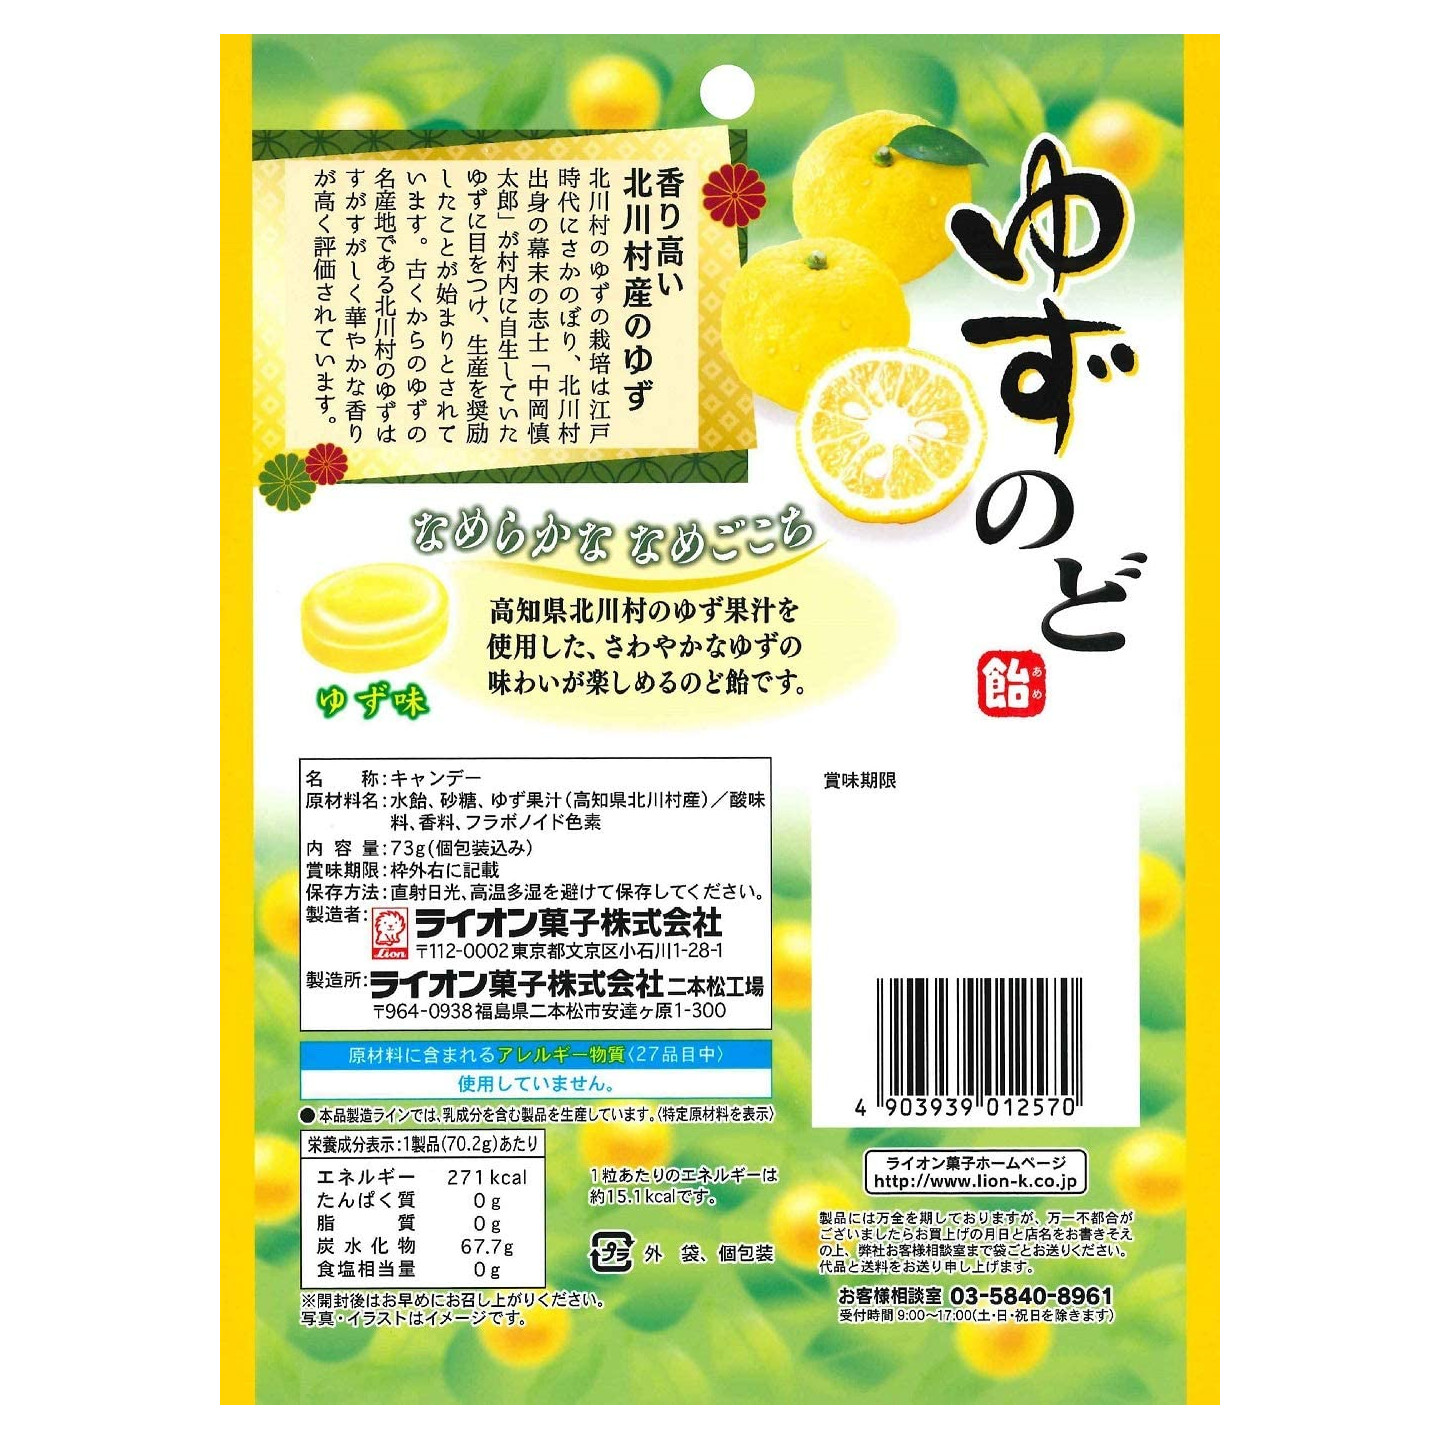 Lion Gashi Yuzu  Nijiya Online Store - Japanese grocery and more